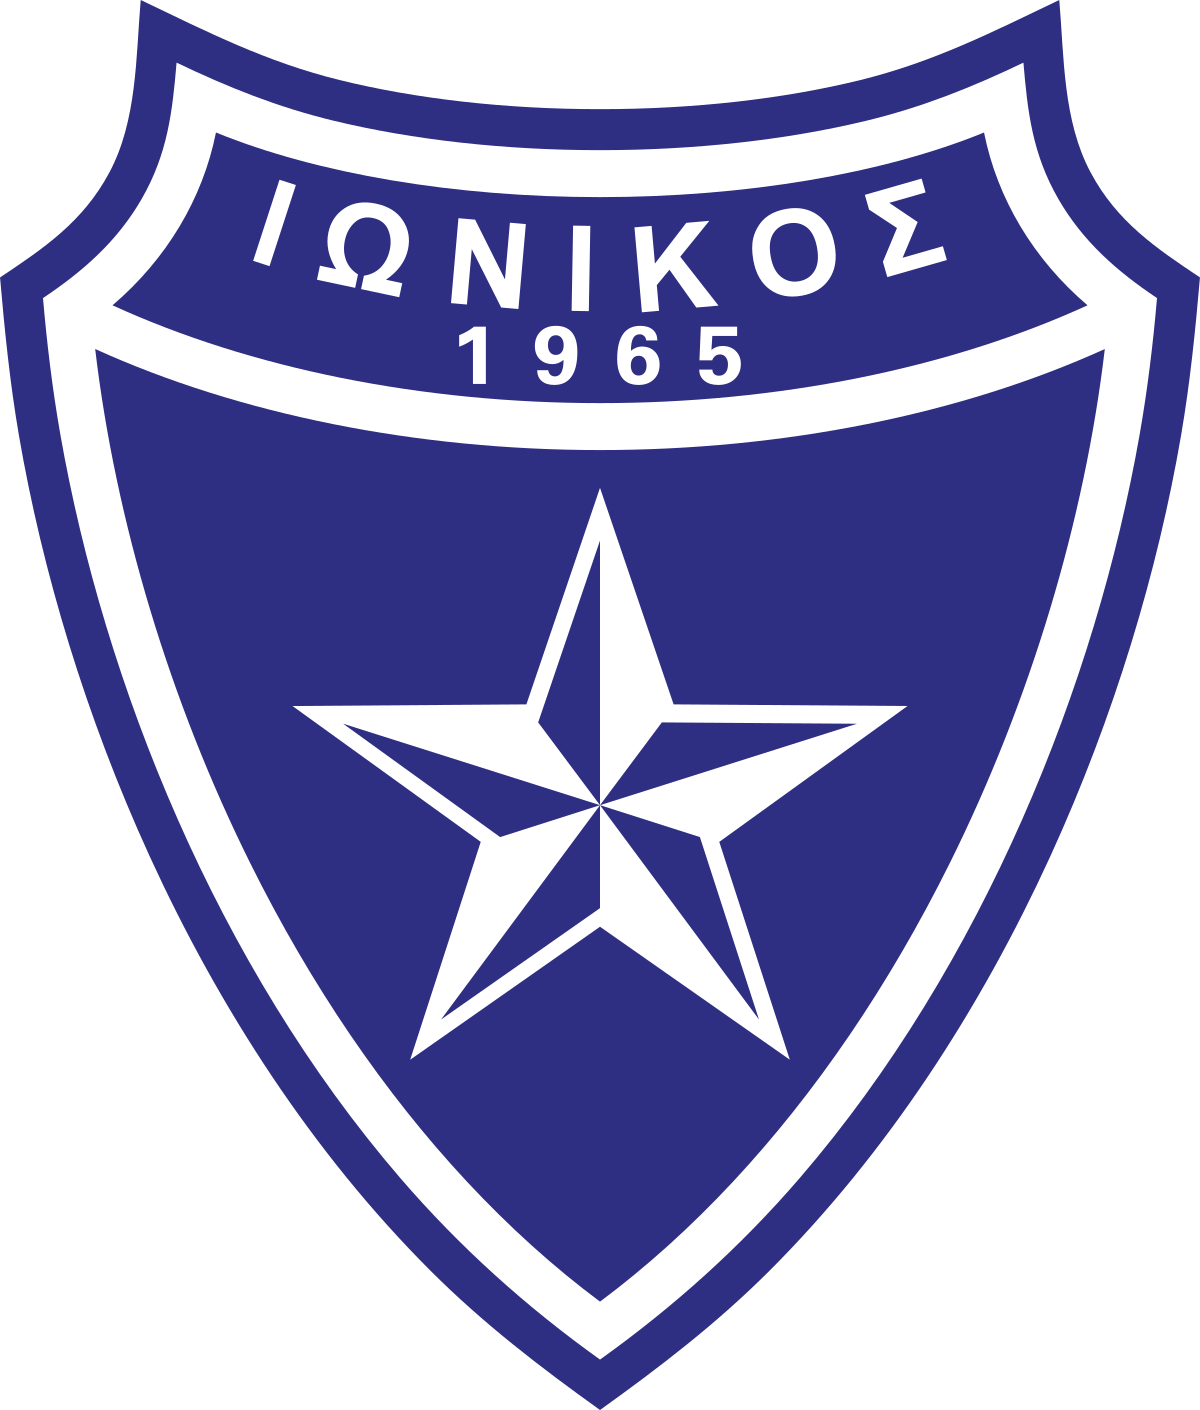 Ionikos U-19 logo